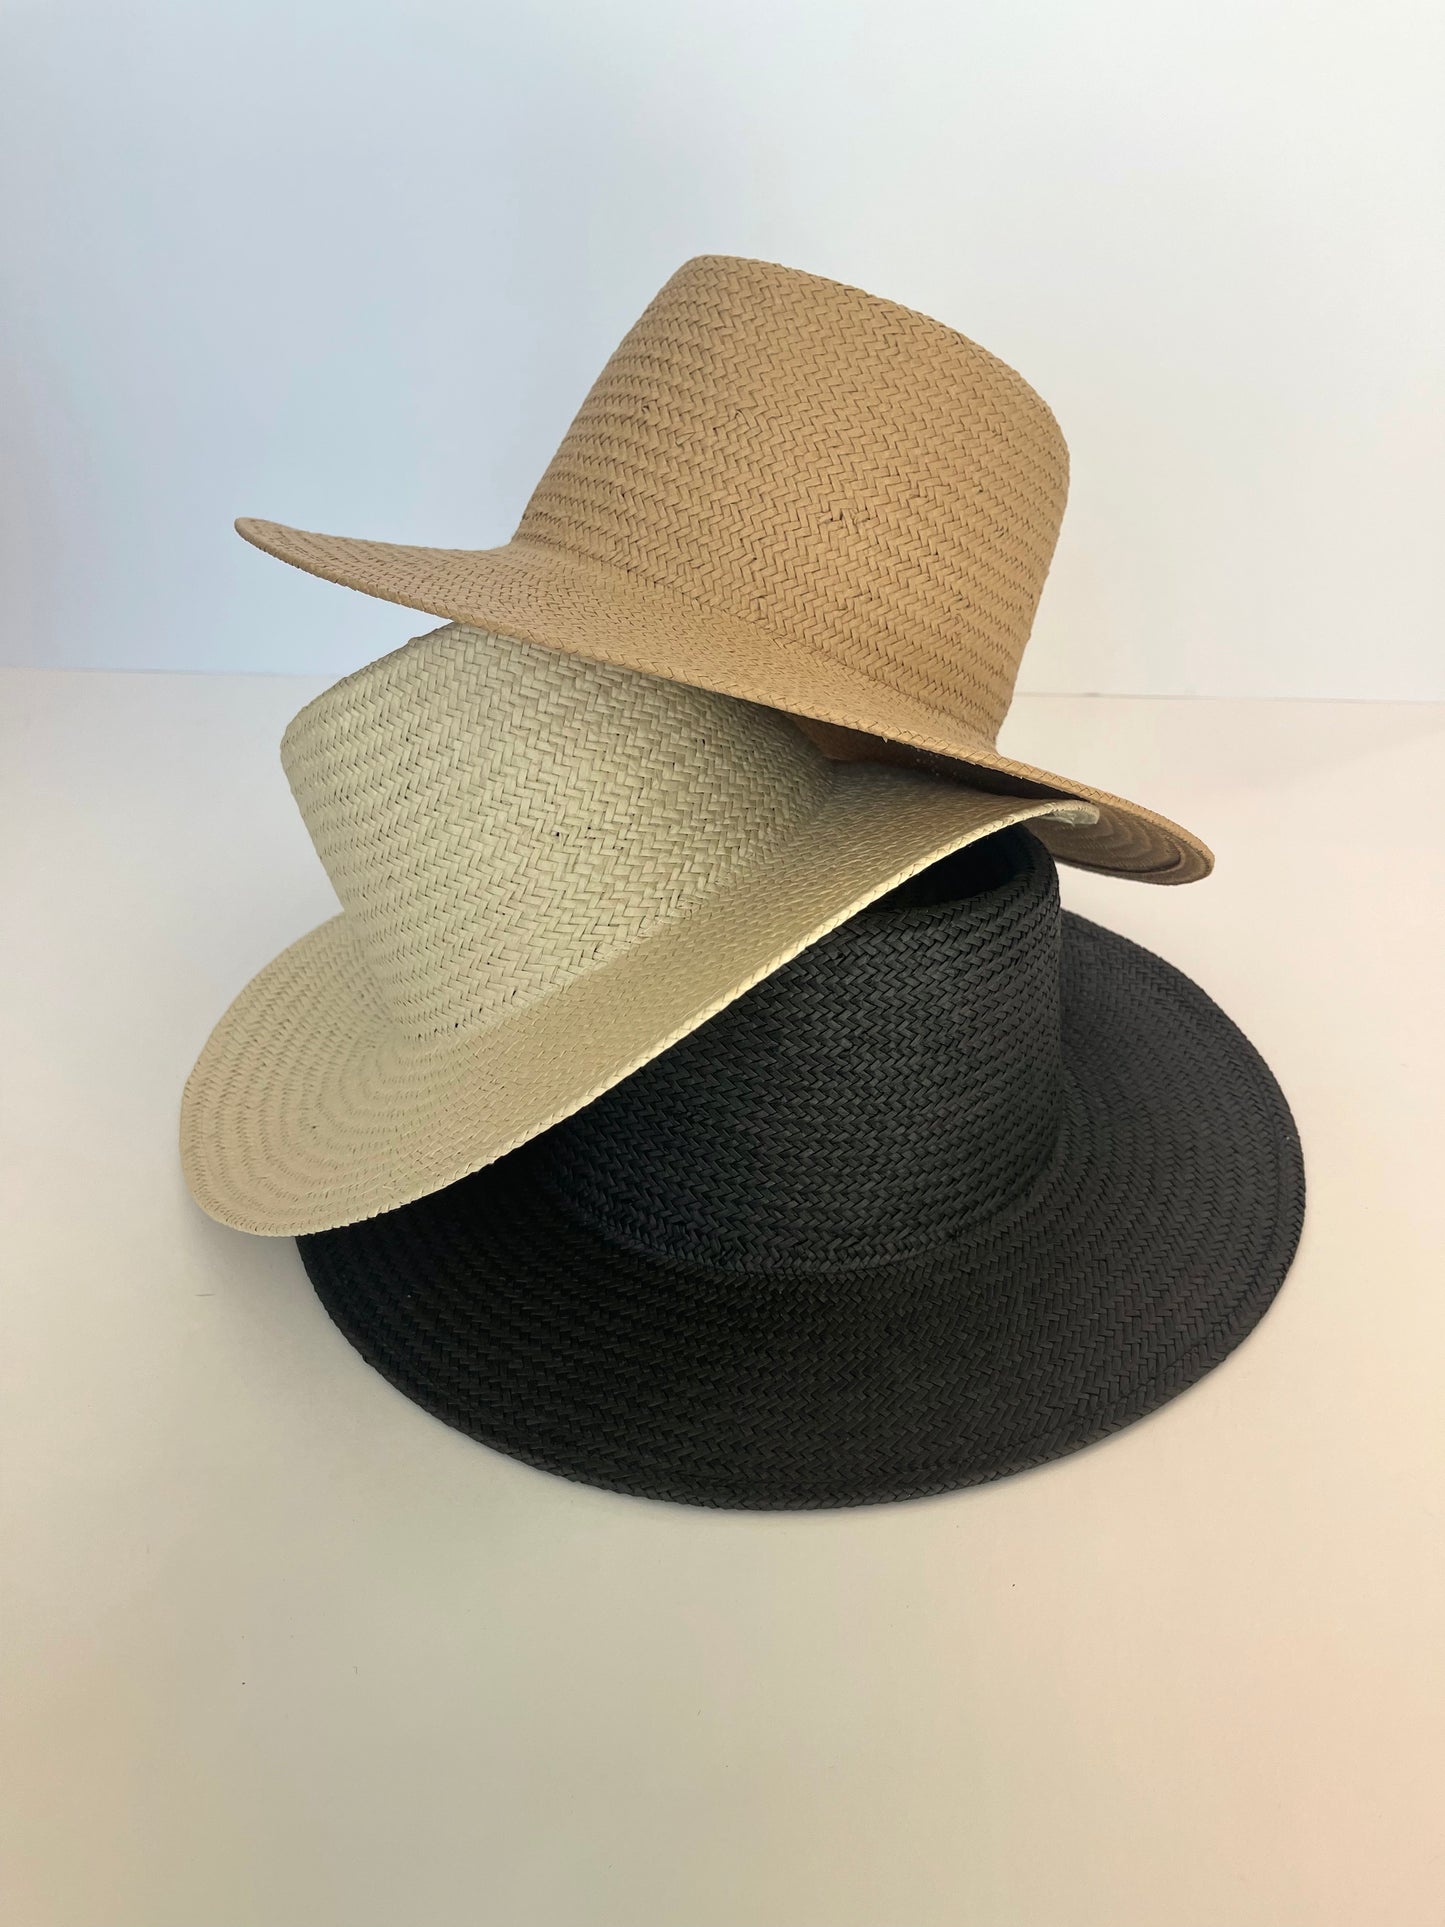 Coronado hat collection